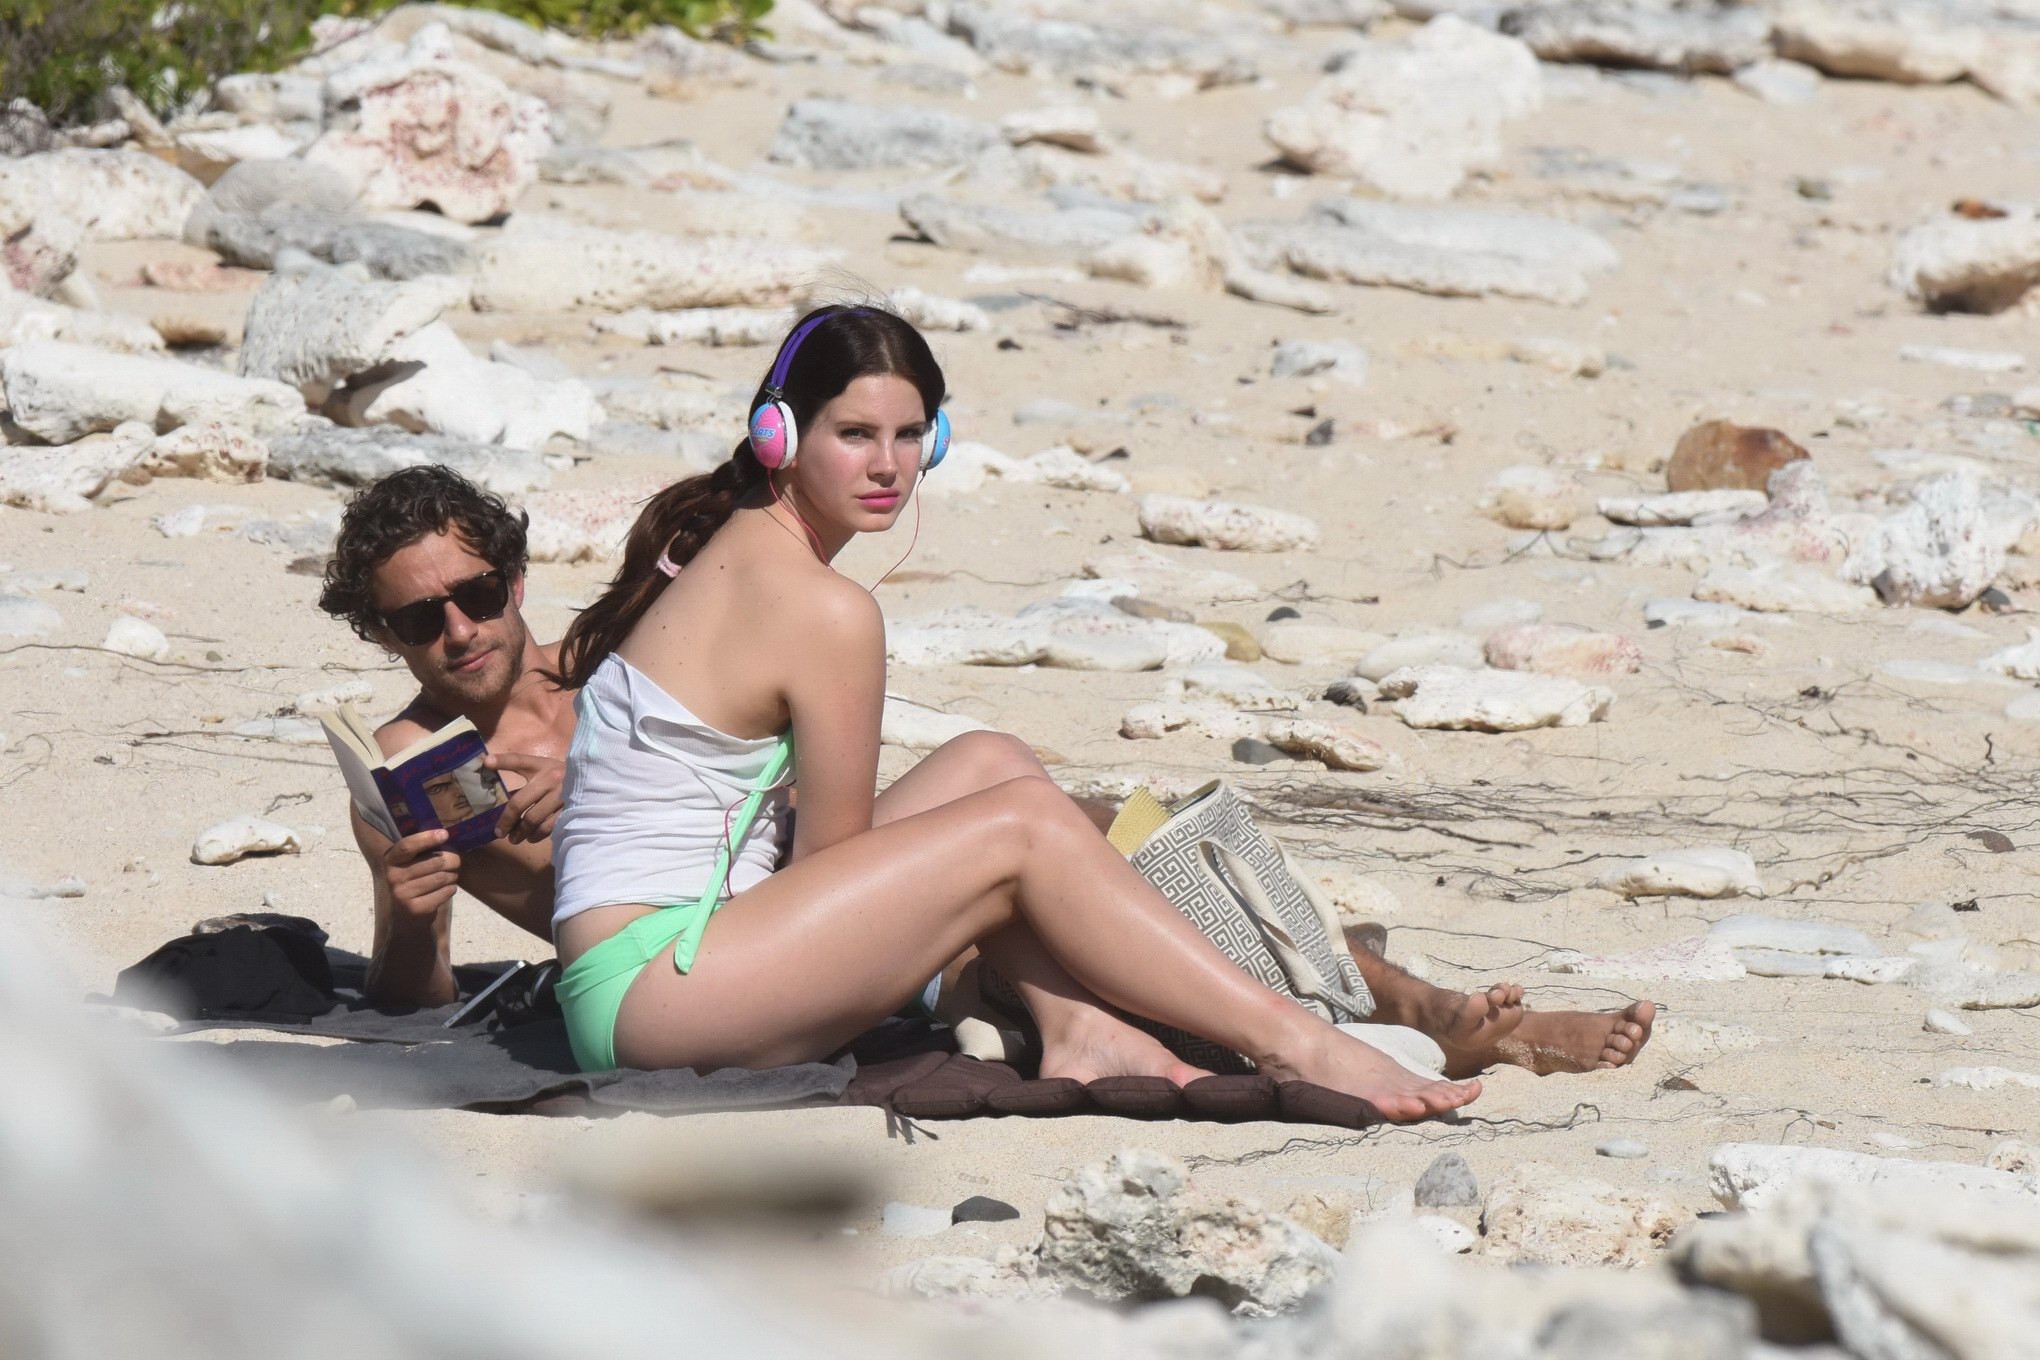 Lana del rey portant un bikini vert sur la plage de st barts
 #75176866